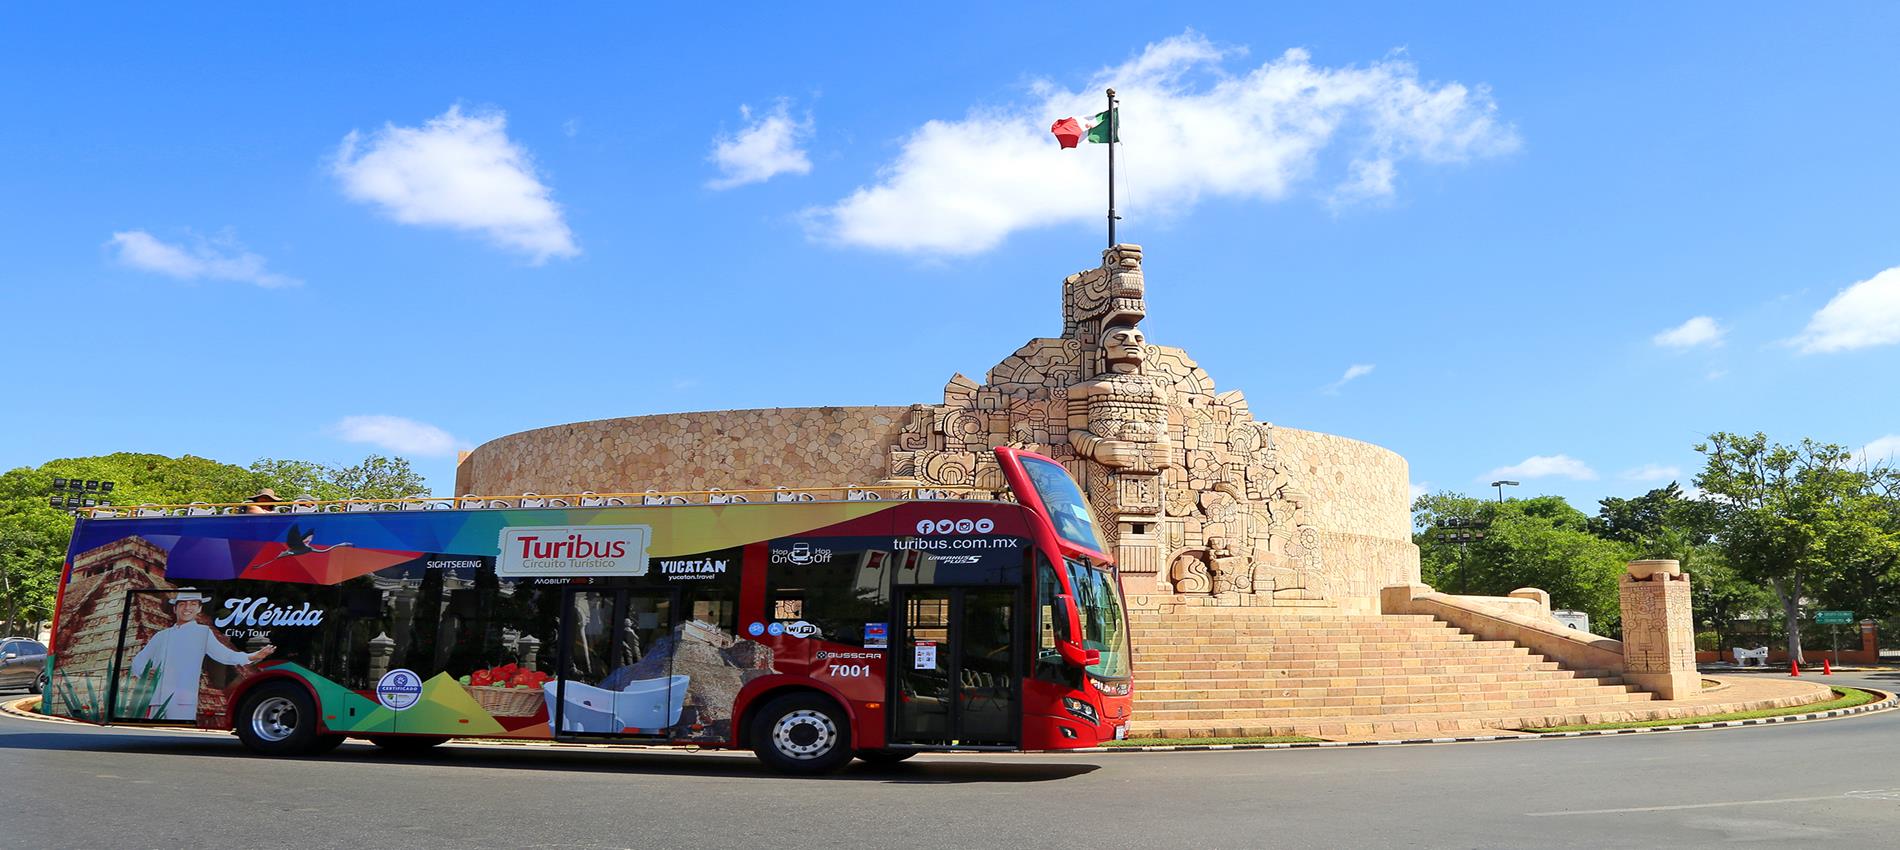 City Tour Mérida por Turibus | Turibus City Tour